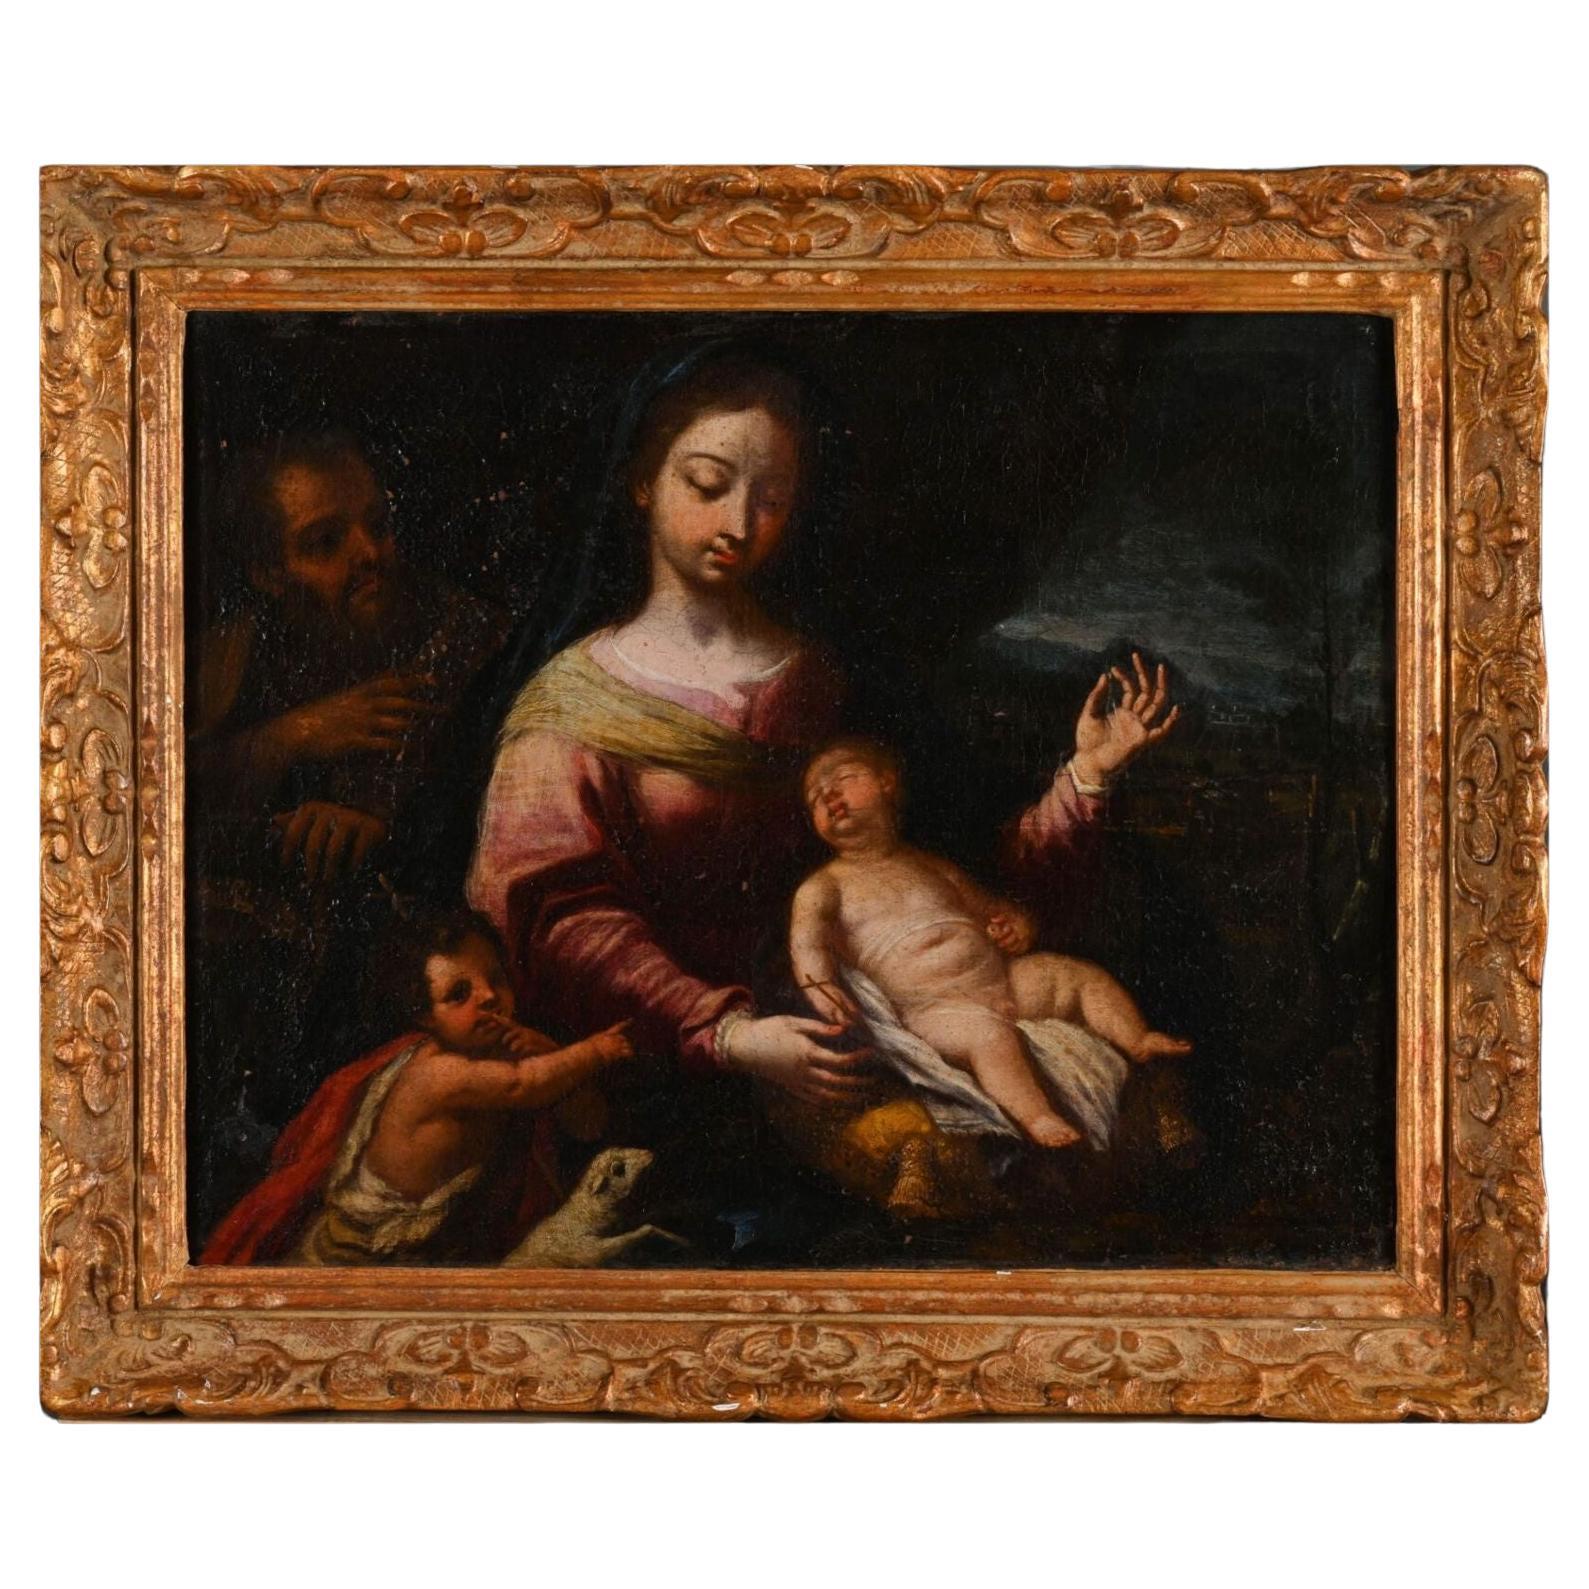 Escuela italiana del siglo XVII  "Sagrada Familia con St. John the Baptist" (La Sagrada Familia con San Juan Bautista) en venta